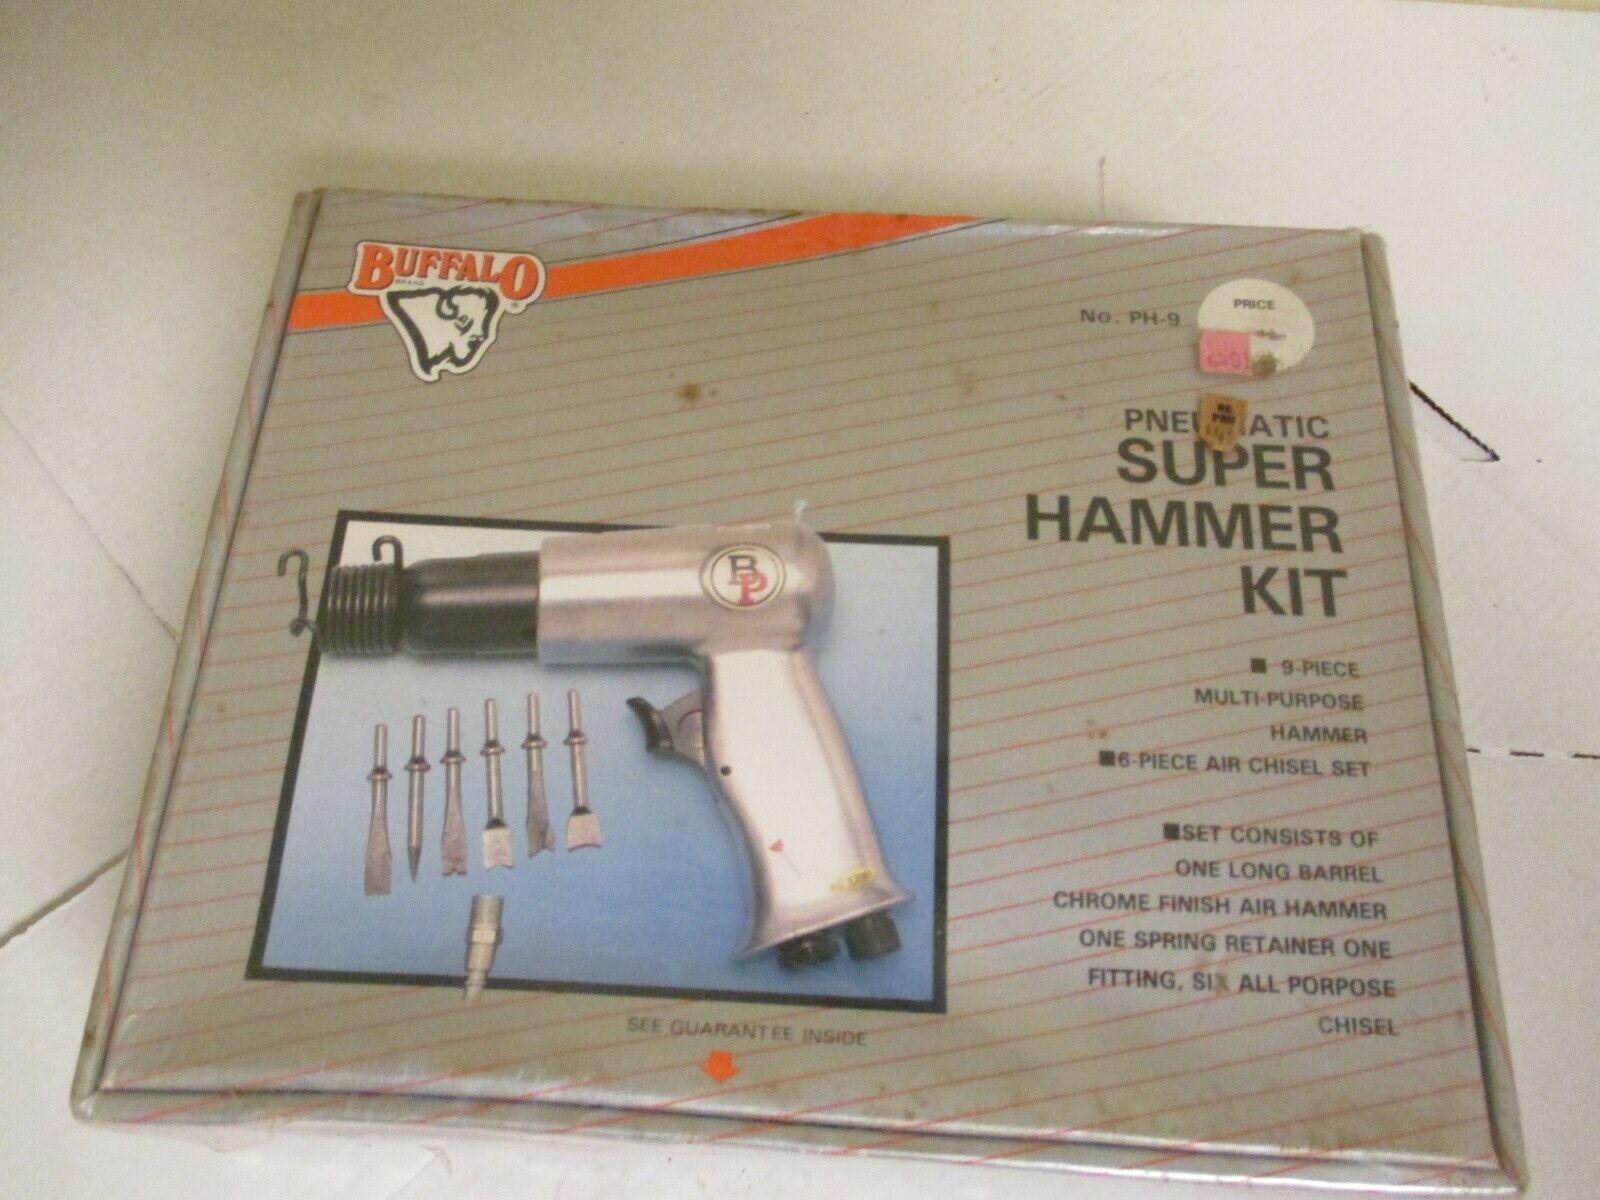 Buffalo NEW Pneumatic 9 Piece Multi-Purpose Air Super Hammer Kit PH-9 Chisel